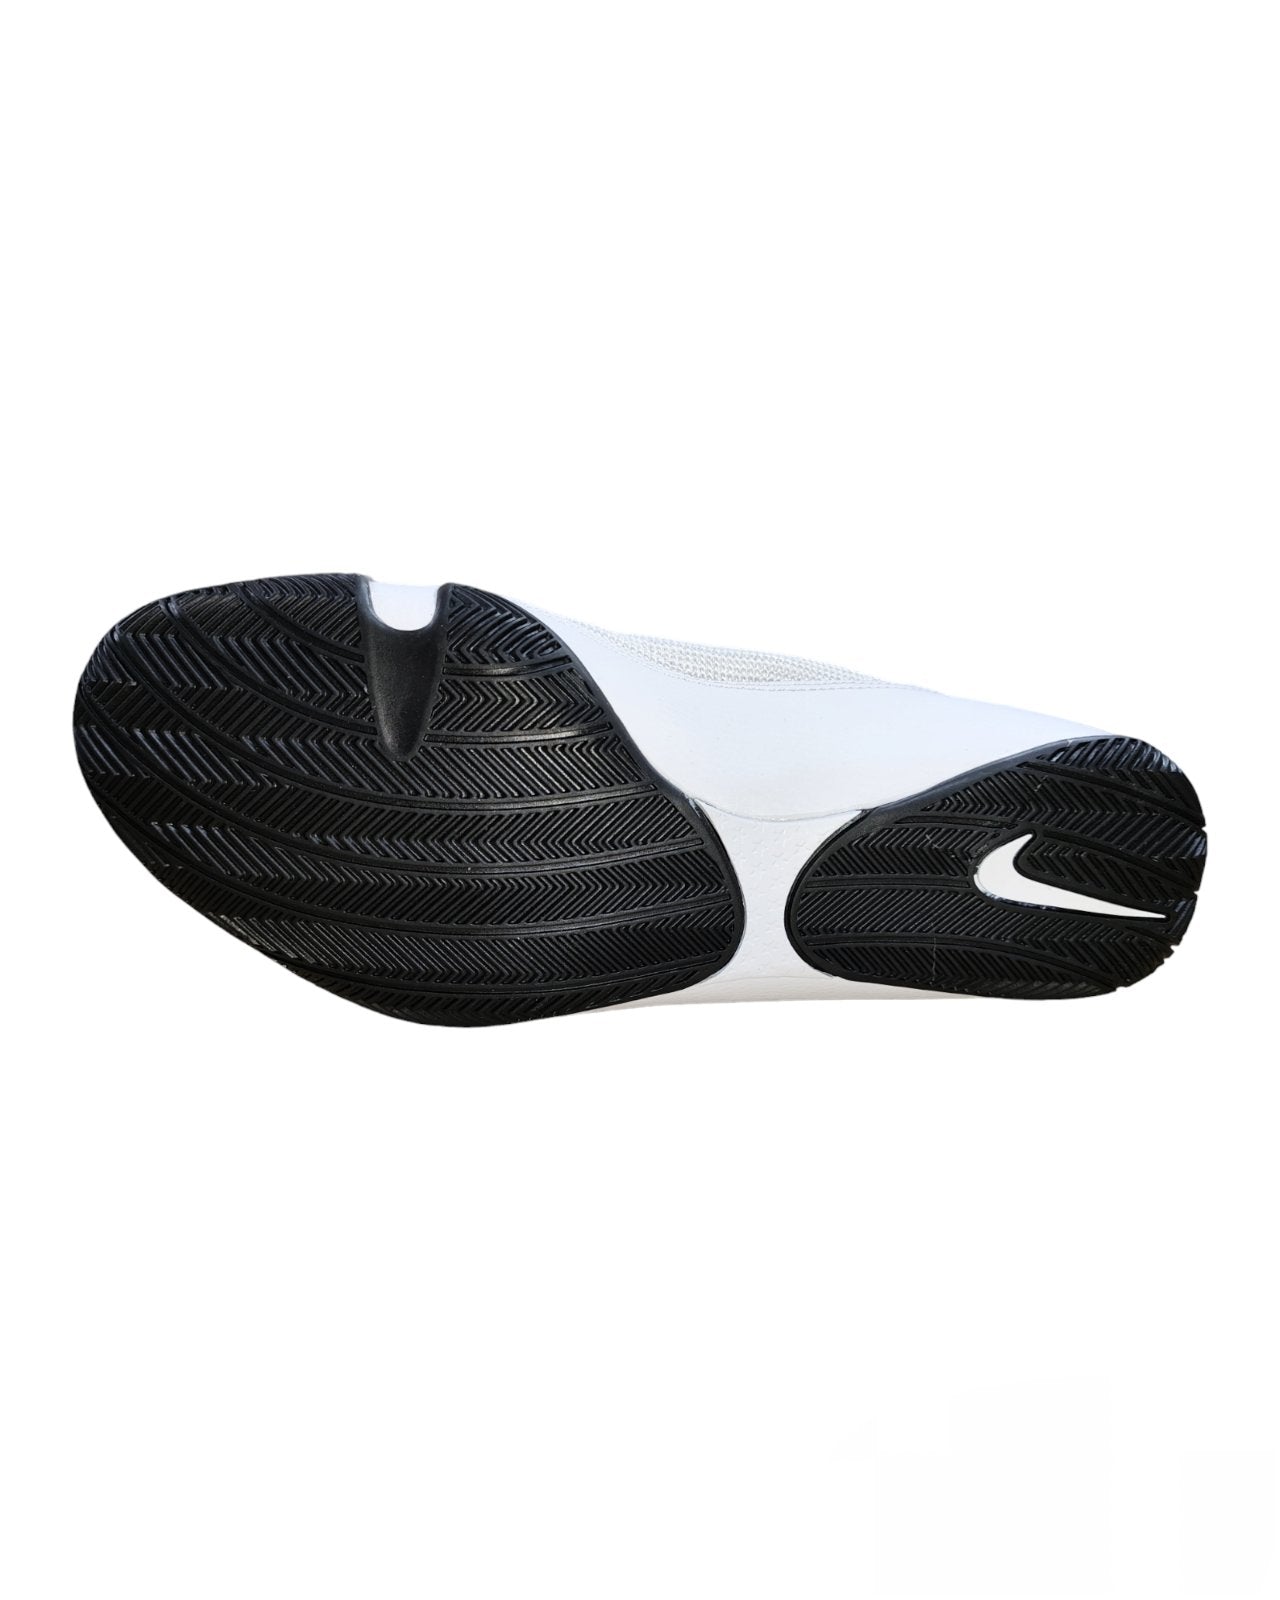 Nike Machomai 2 Boxing Shoes [White/Black Wolf Gray]